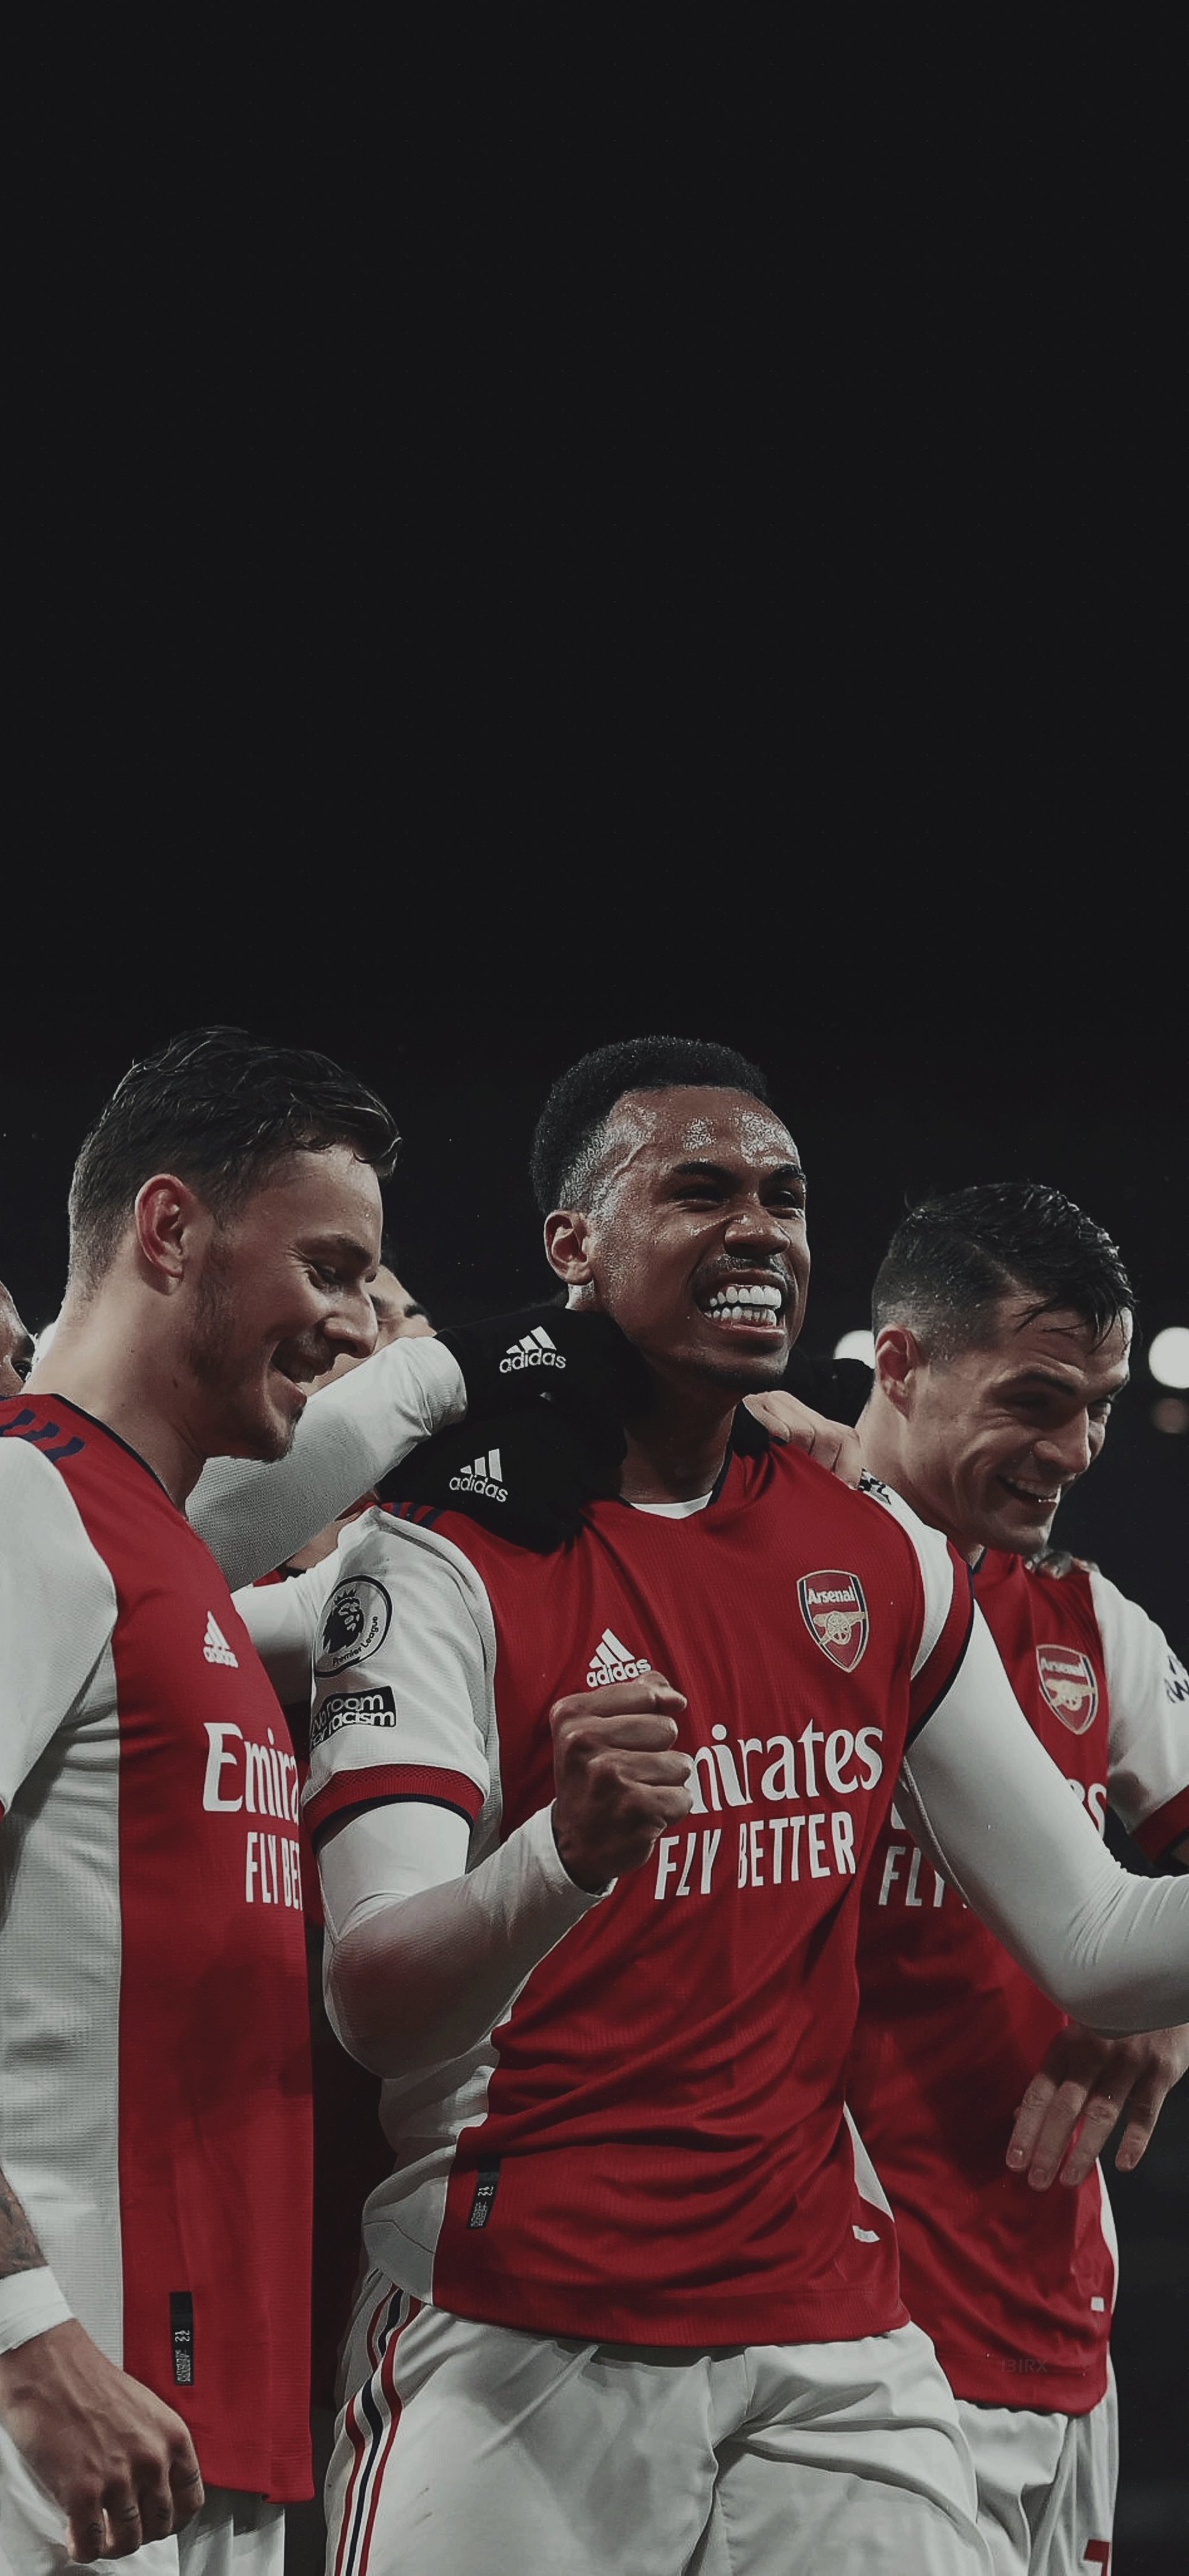 Arsenal Wallpapers